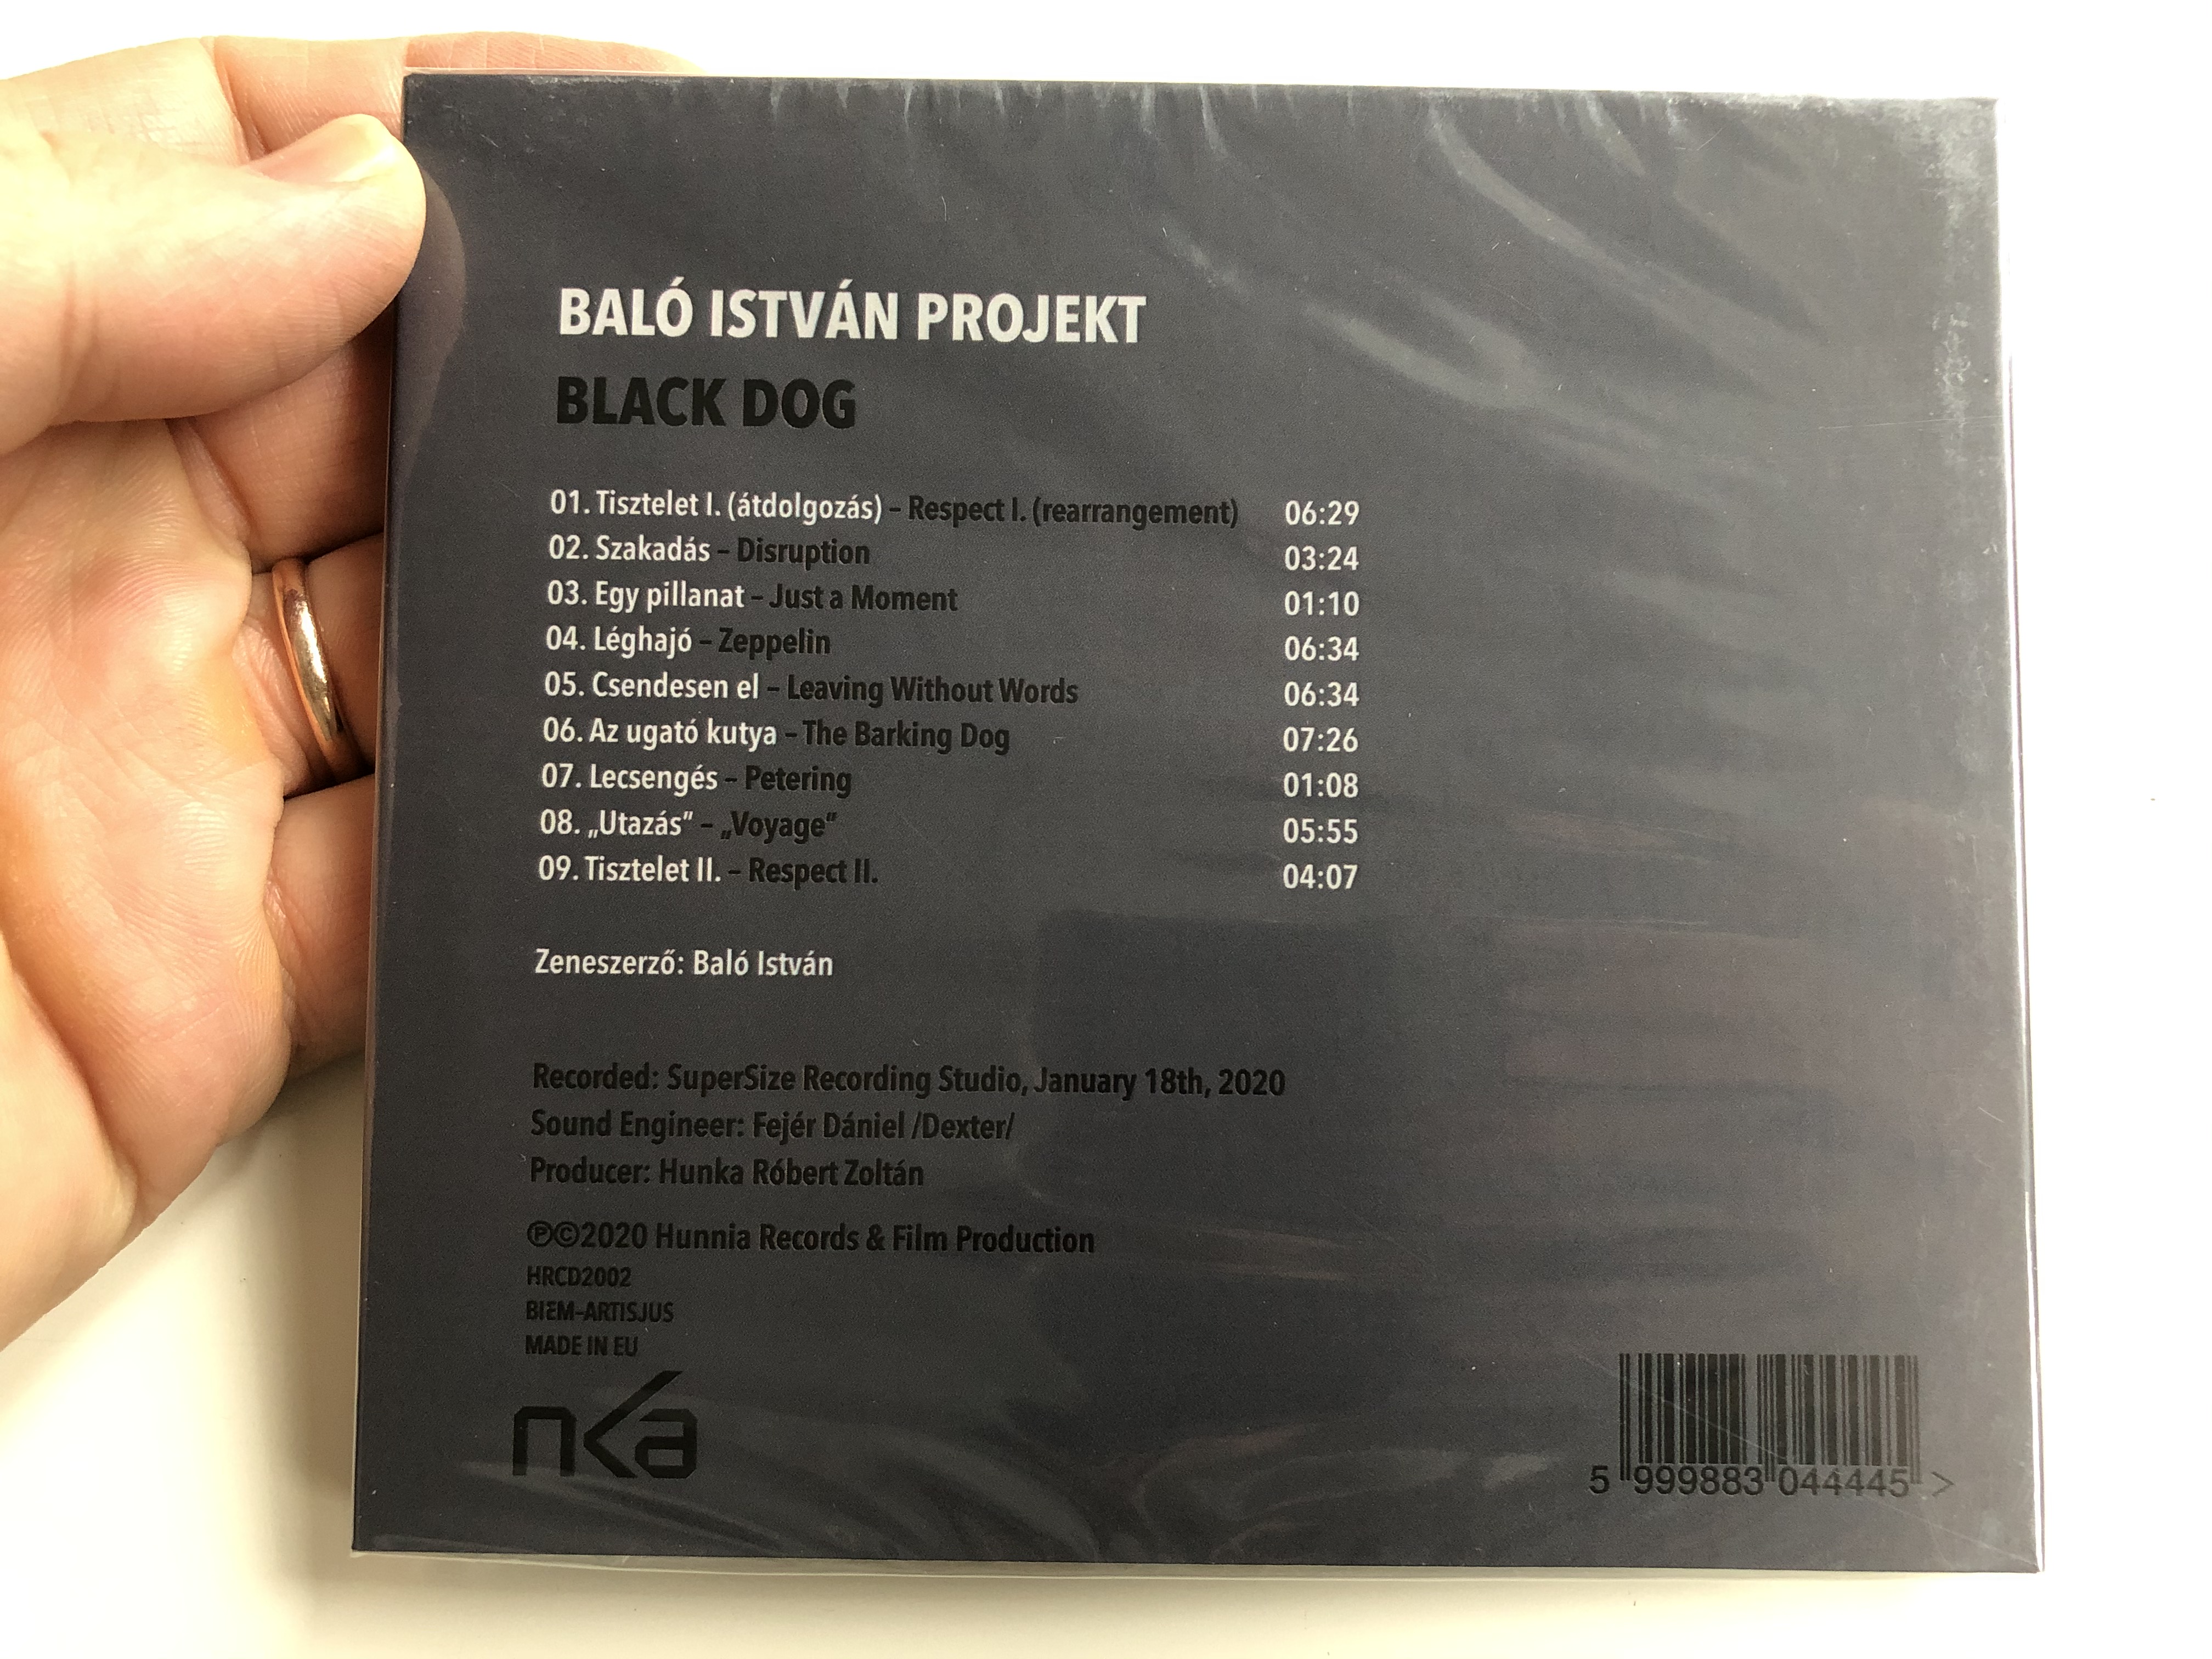 balo-istvan-projekt-black-dog-w-69-hunnia-records-film-production-audio-cd-2020-hrcd2002-2-.jpg